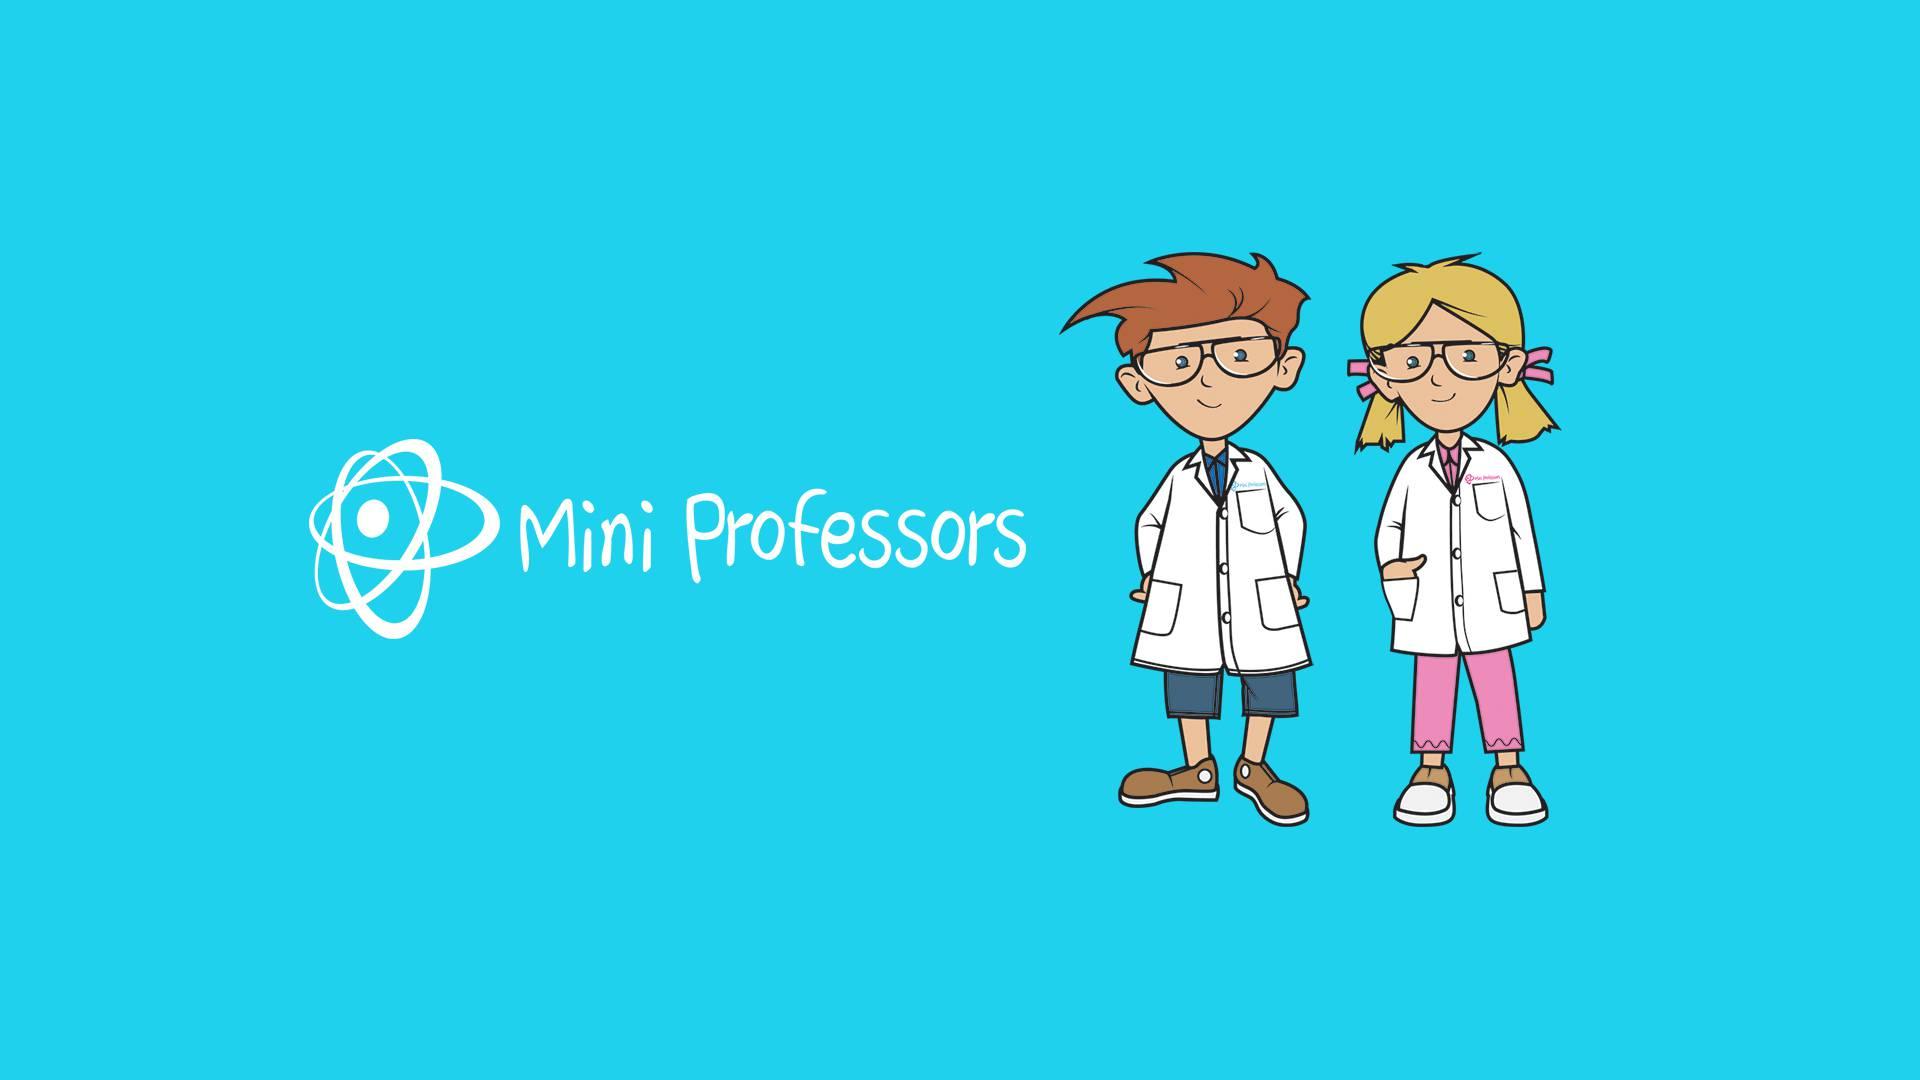 Mini Professors photo